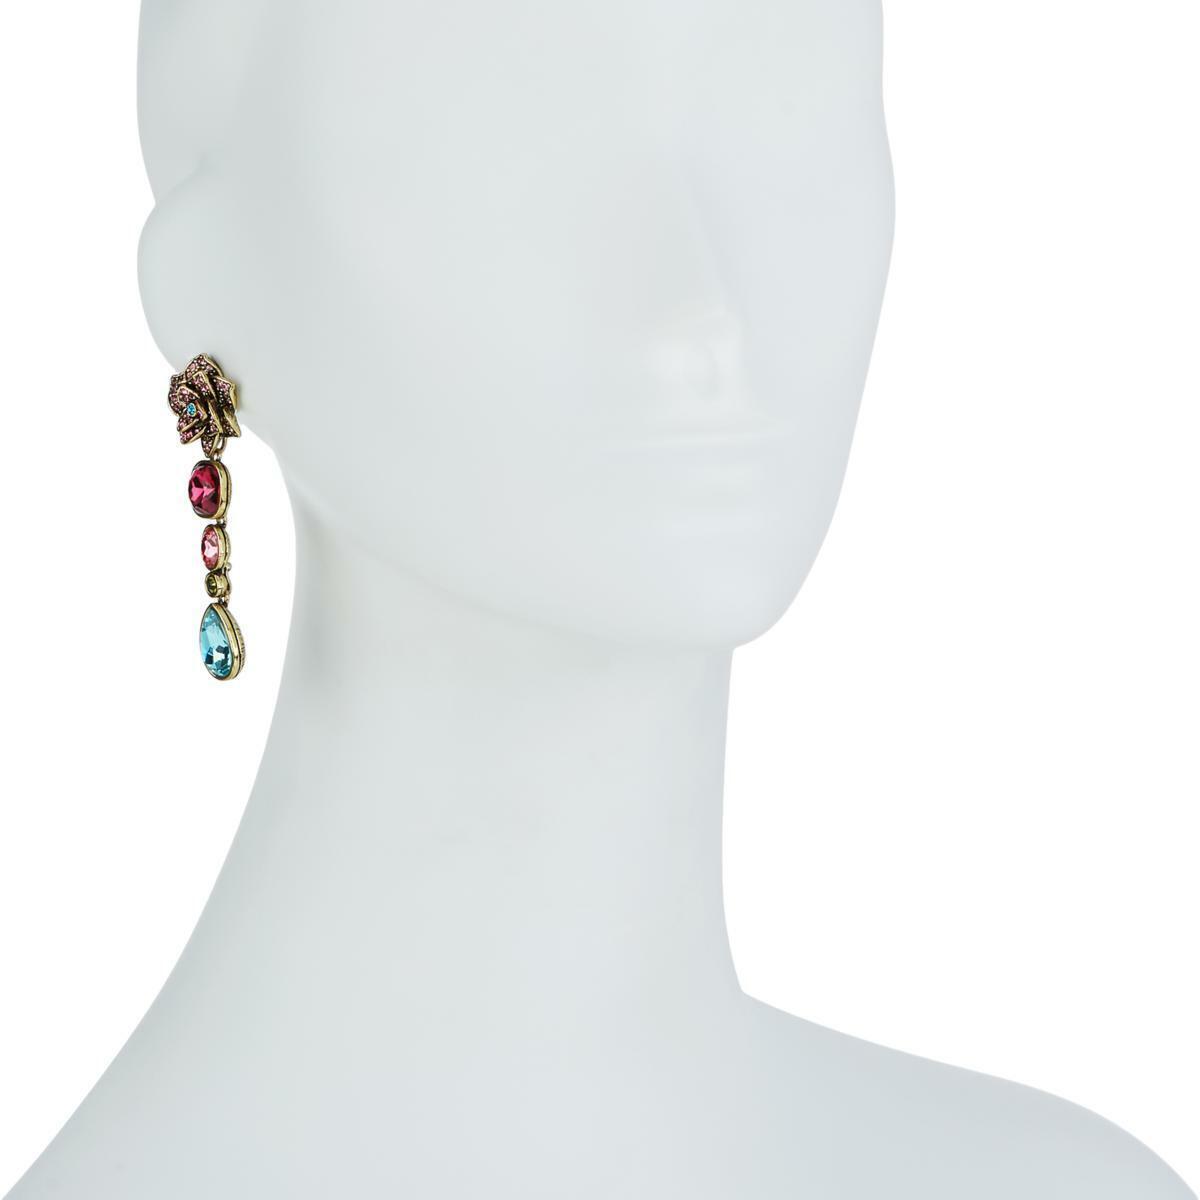 Heidi Daus "Dripping with Gems" Floral Dangle Earrings.